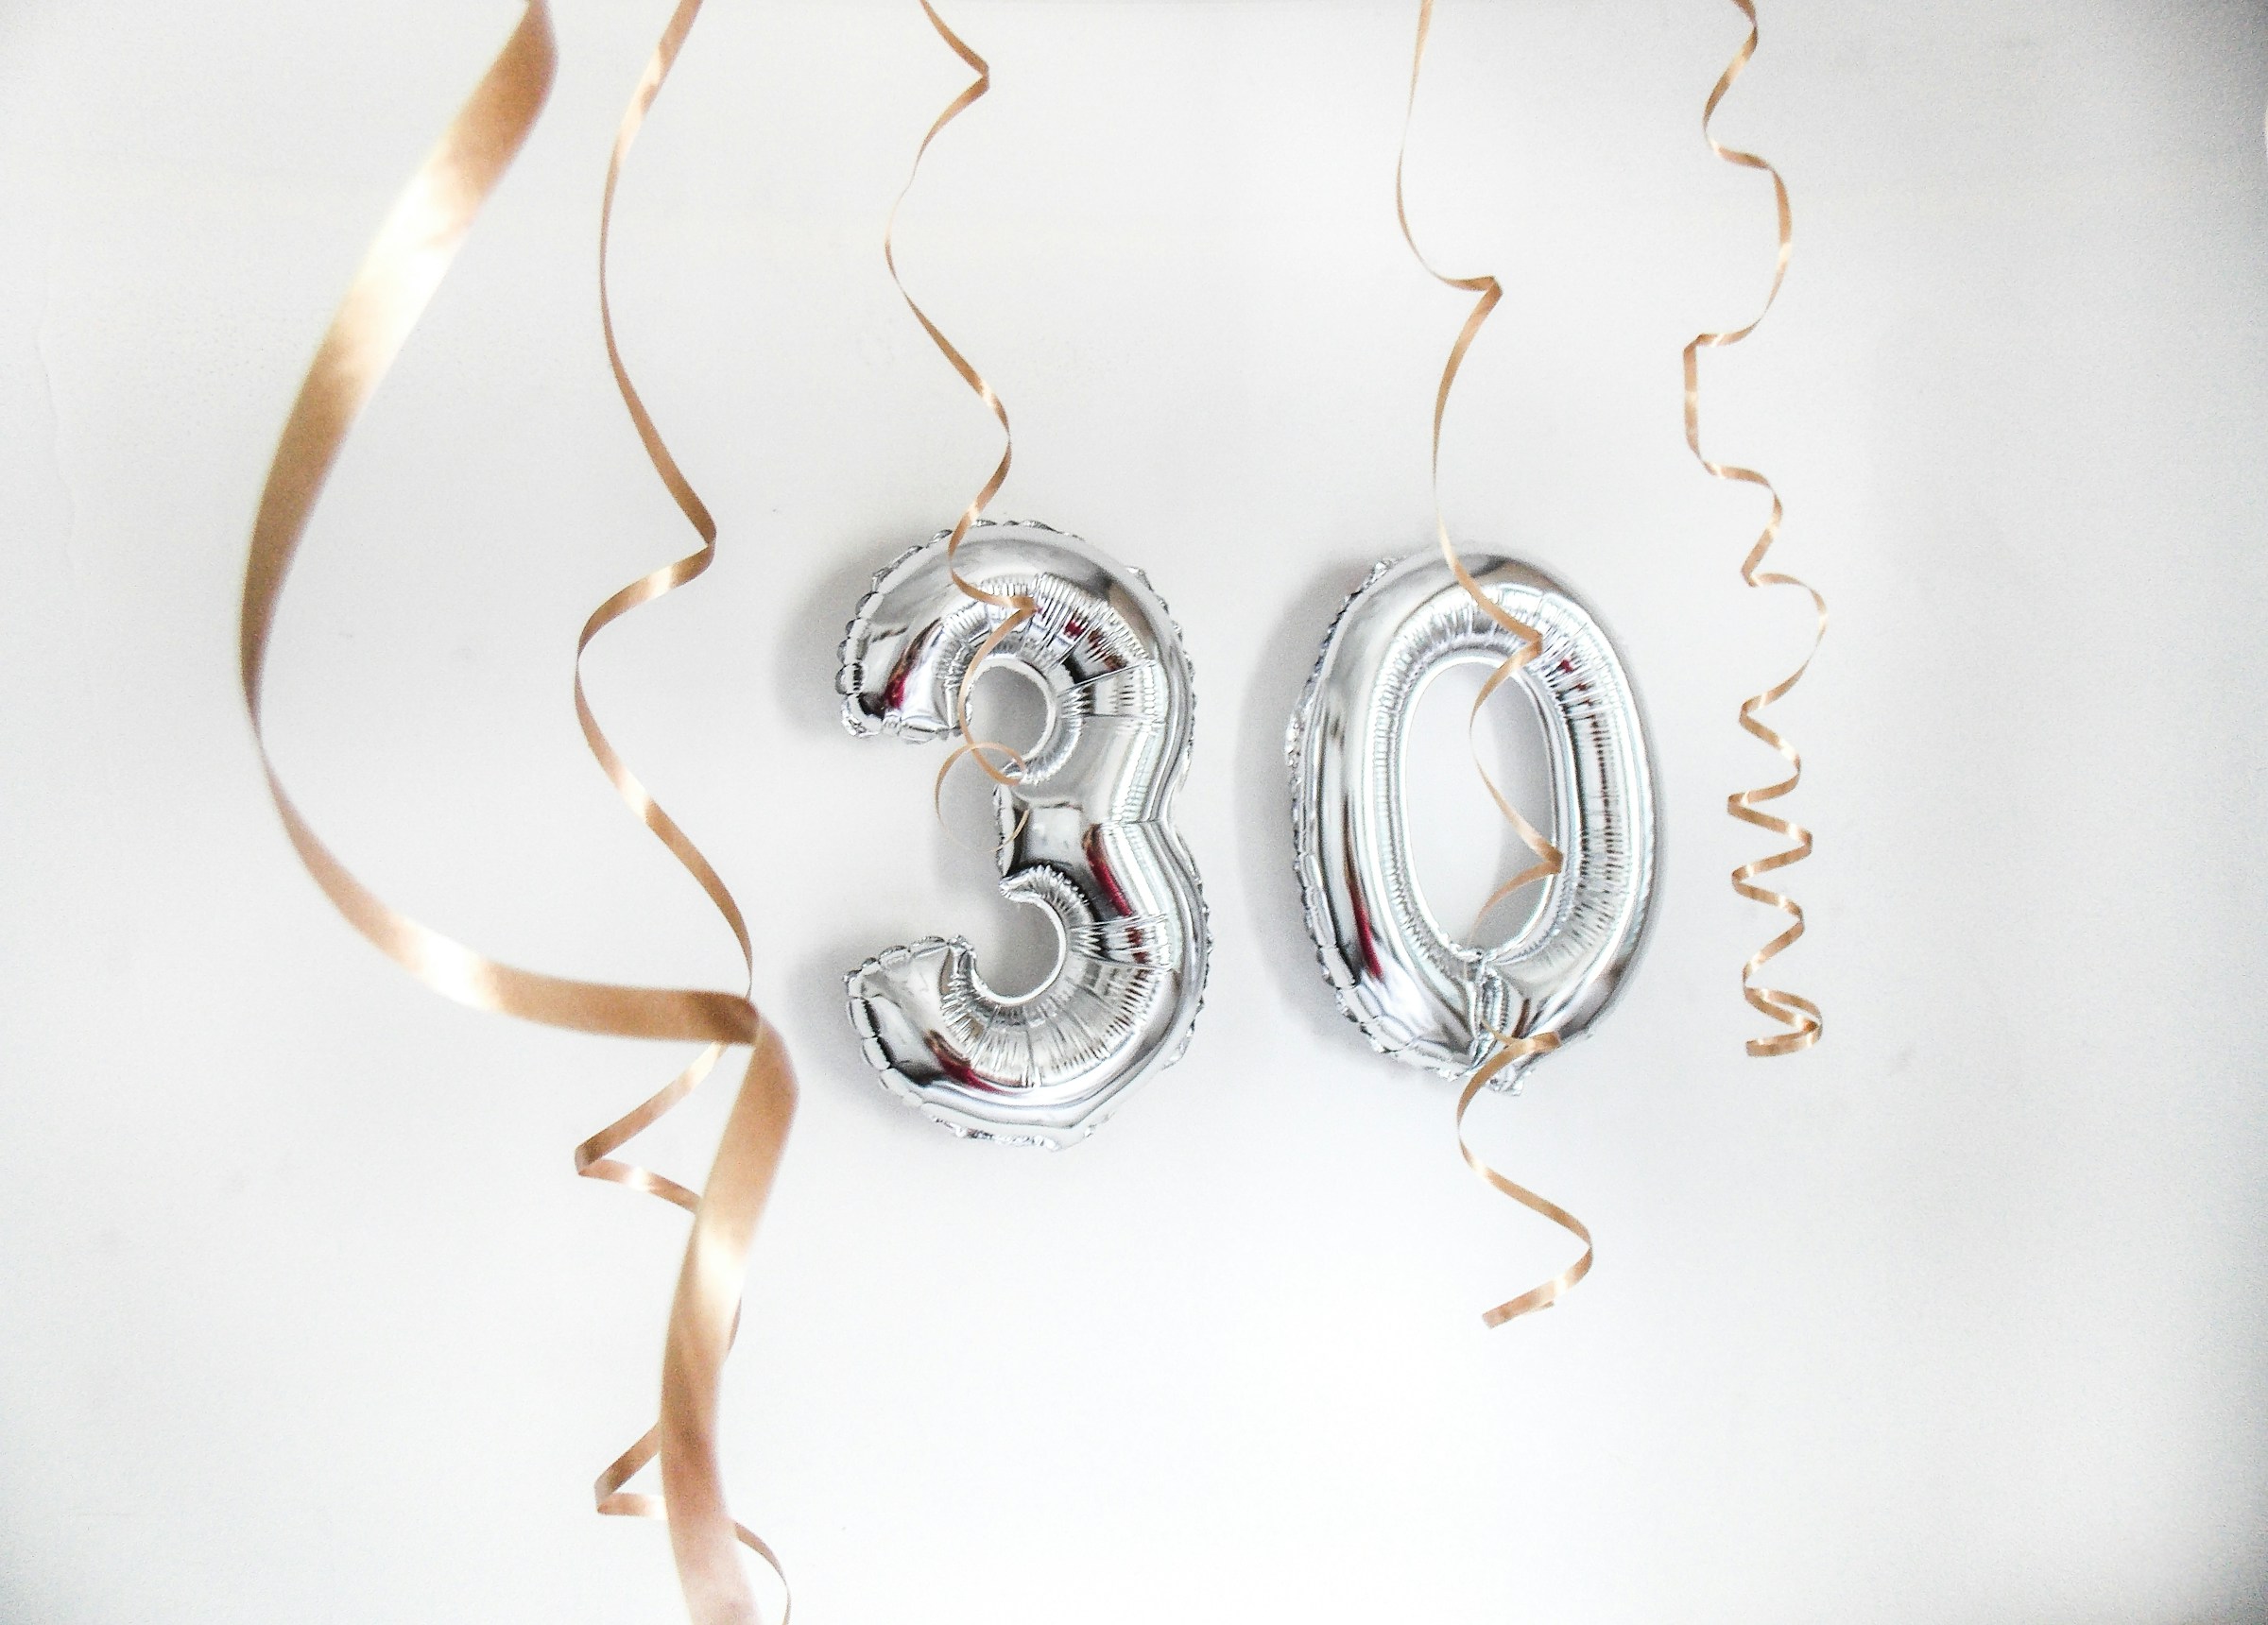 Silver birthday balloons | Source: Unsplash